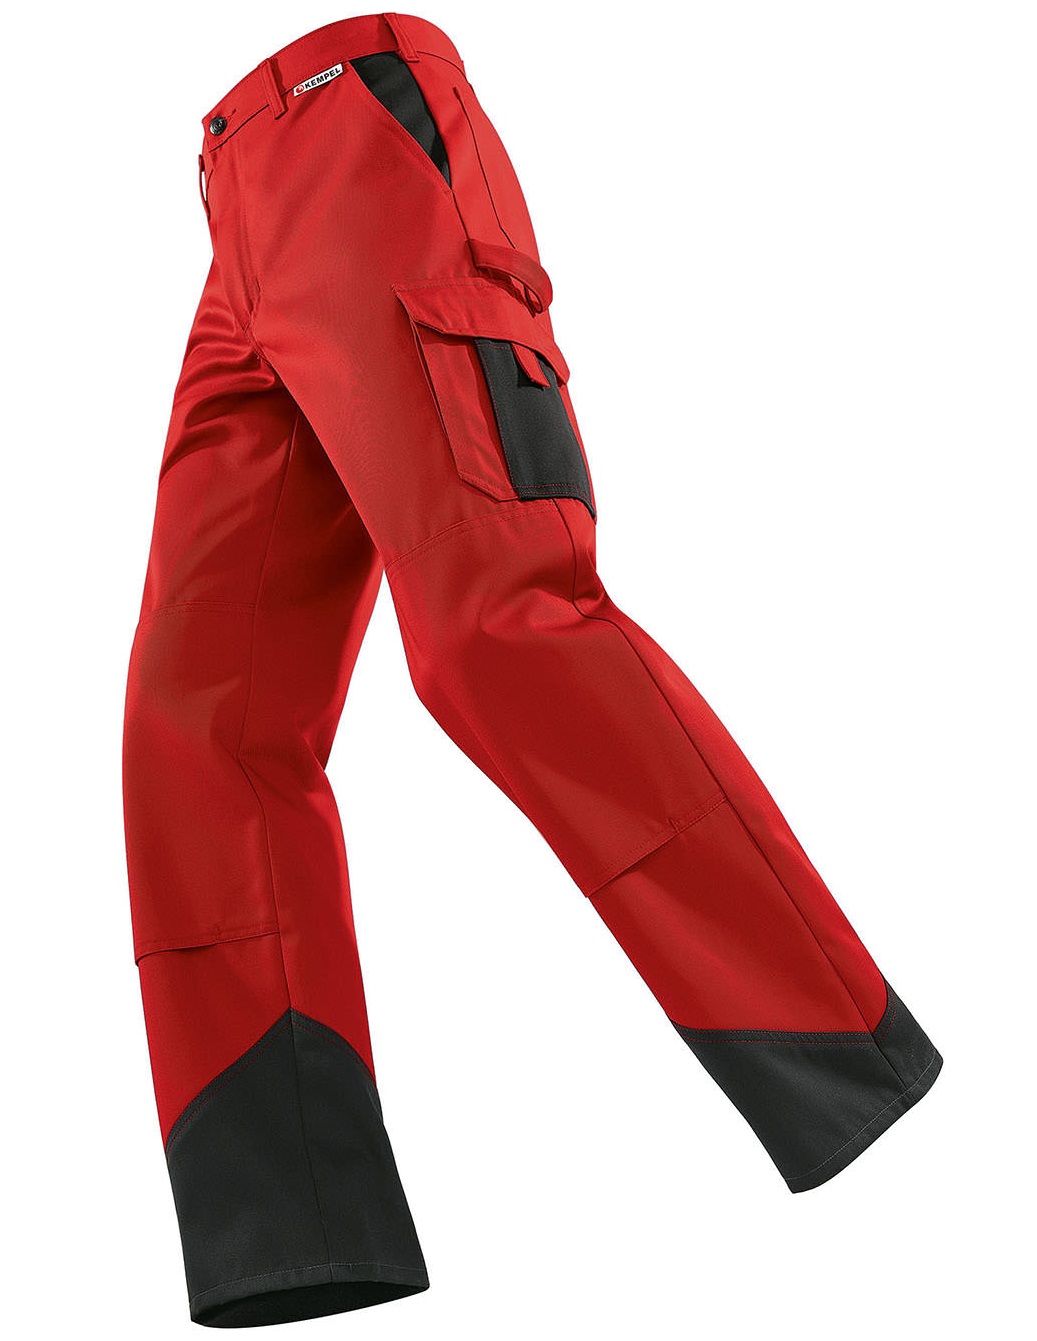 KEMPEL Bundhose Arbeitshose Berufshose Workerhose Arbeitskleidung Berufskleidung rot anthrazit ca 325g